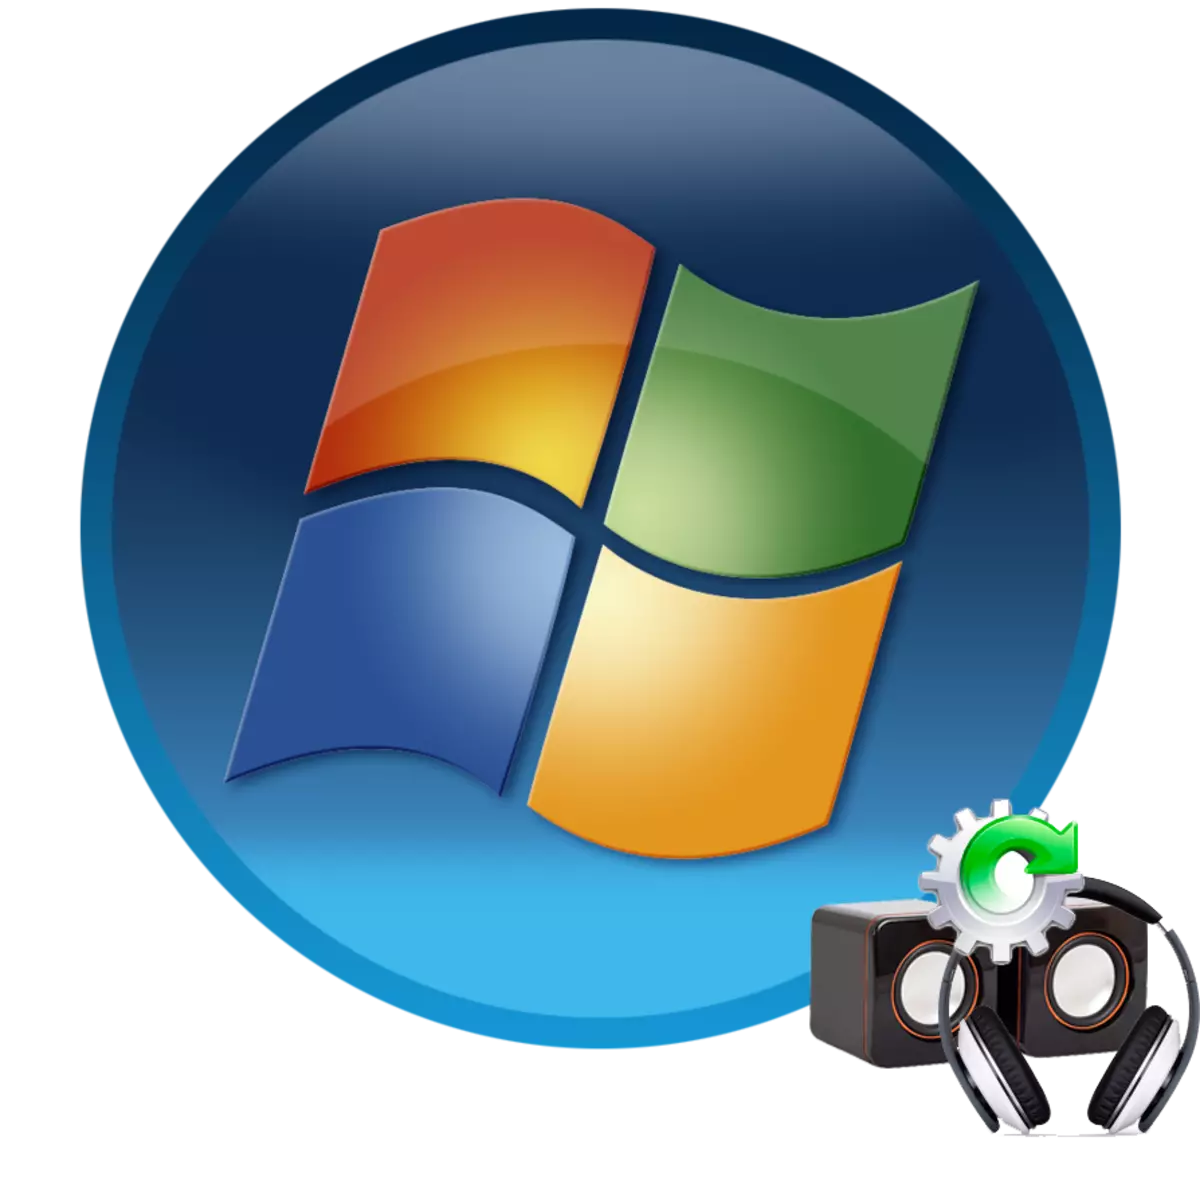 Windows 7 ရှိကွန်ပျူတာပေါ်တွင်အသံ configuration ကိုအသံဖွဲ့စည်းခြင်း